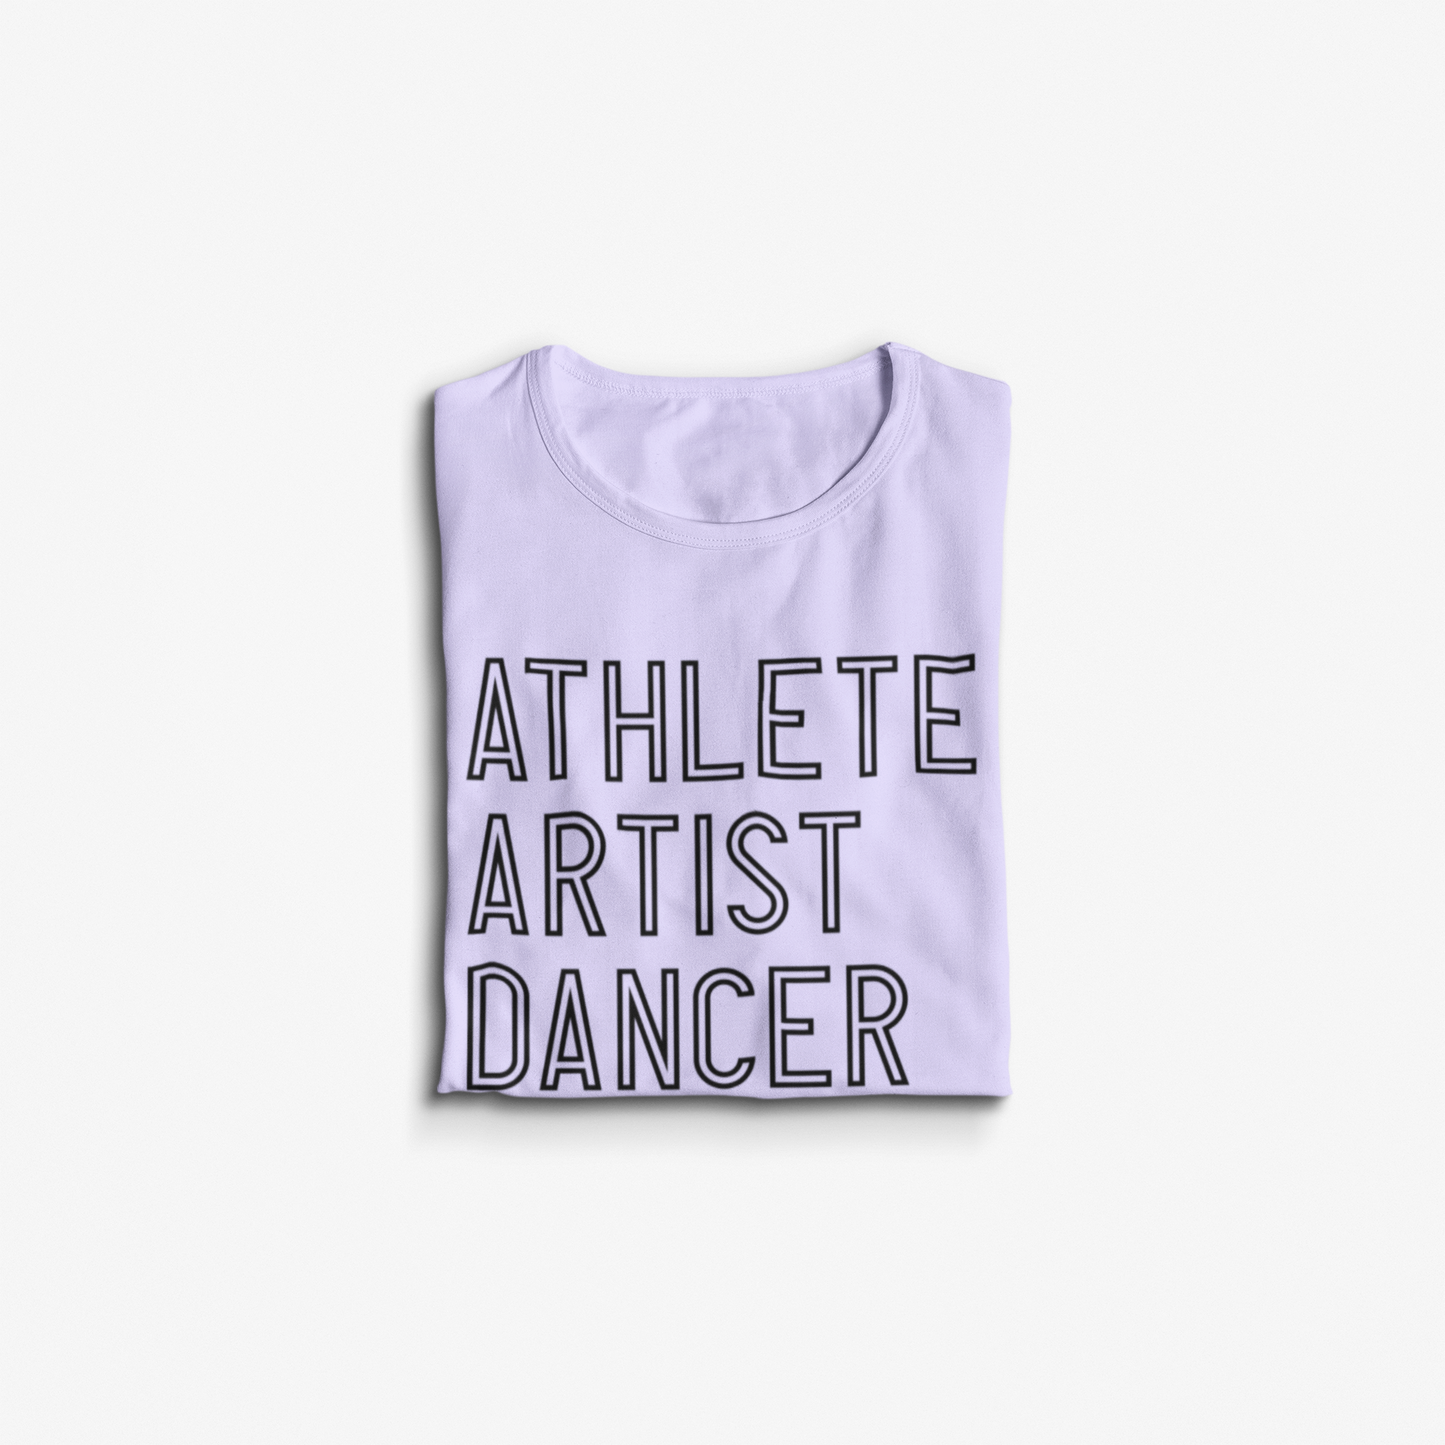 Athlete Artist Dancer T-Shirt Design